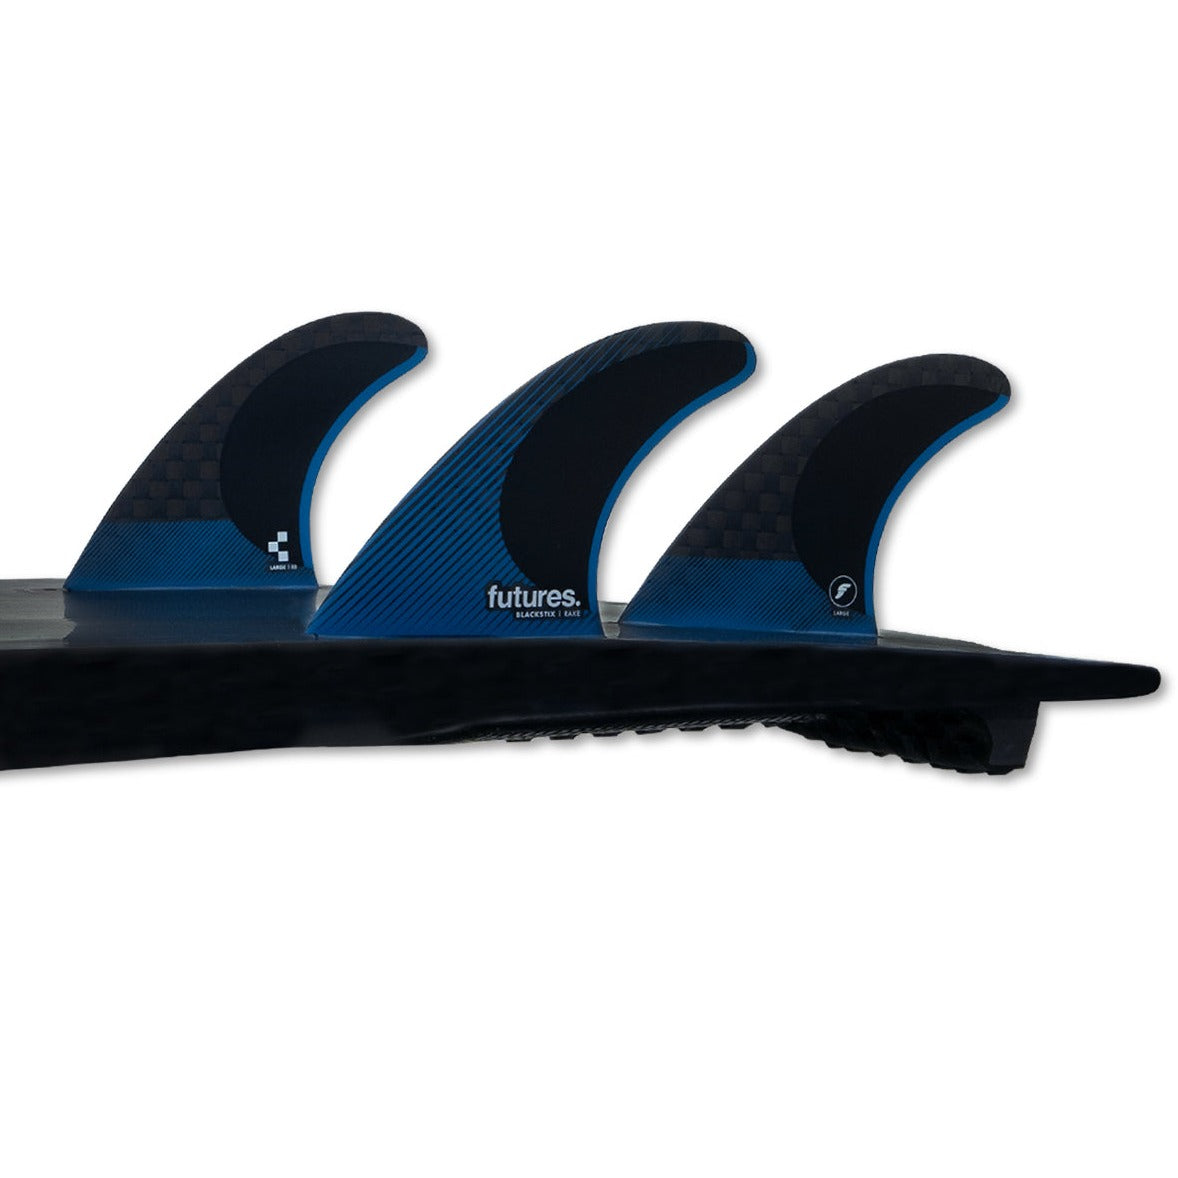 futures-large-R8-blackstix-thruster-in-surfboard